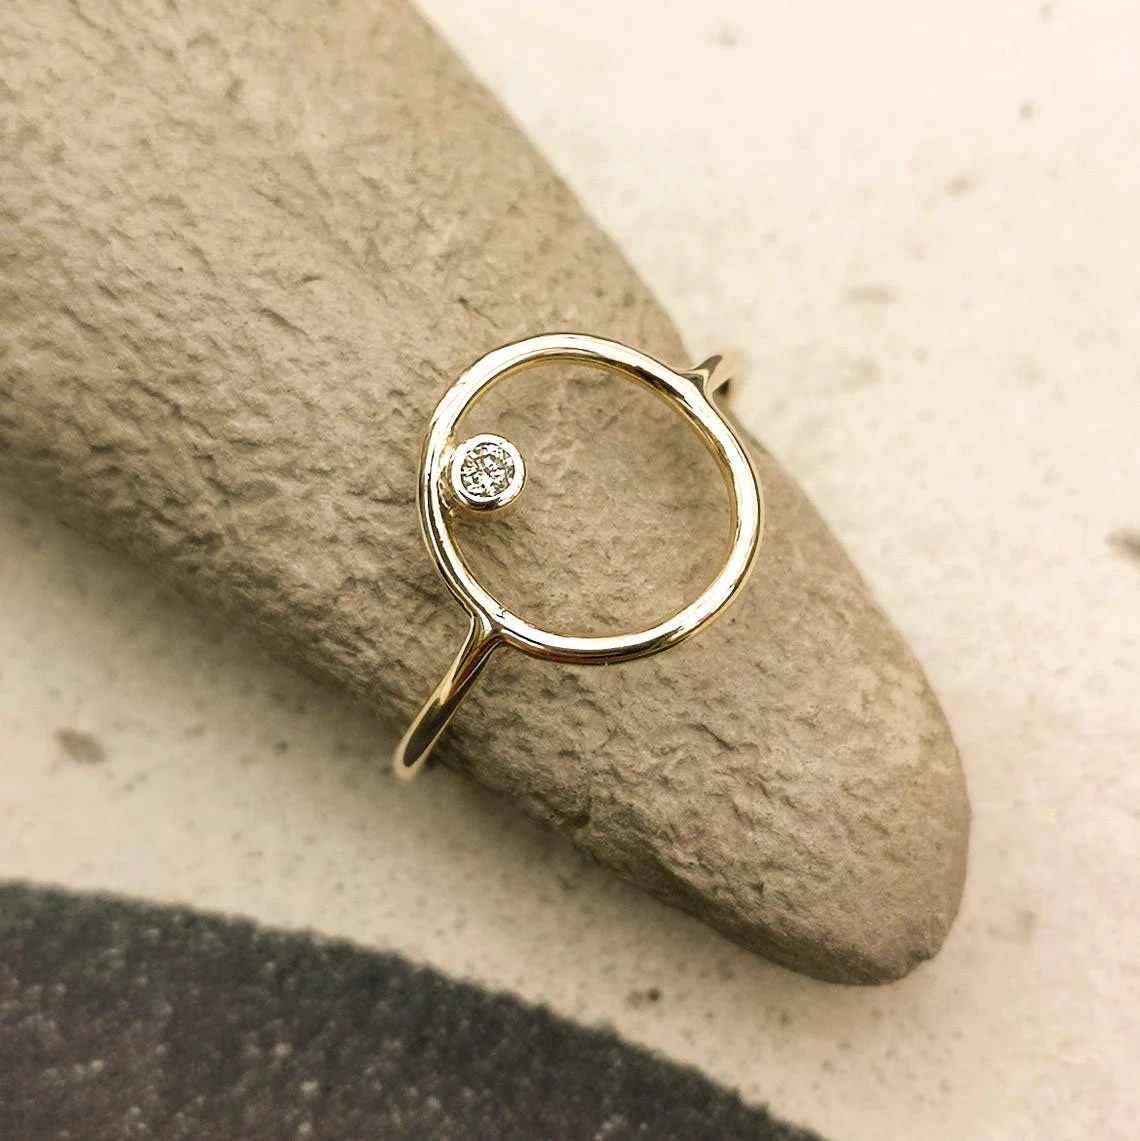 10K Solid Gold Round Tiny Crystal Karma Thin Ring Handmade Stacking Modernist Dainty Ring Minimalist Geometric Circle Unique Statement Ring-10 3/4 US/Uk size – V-1